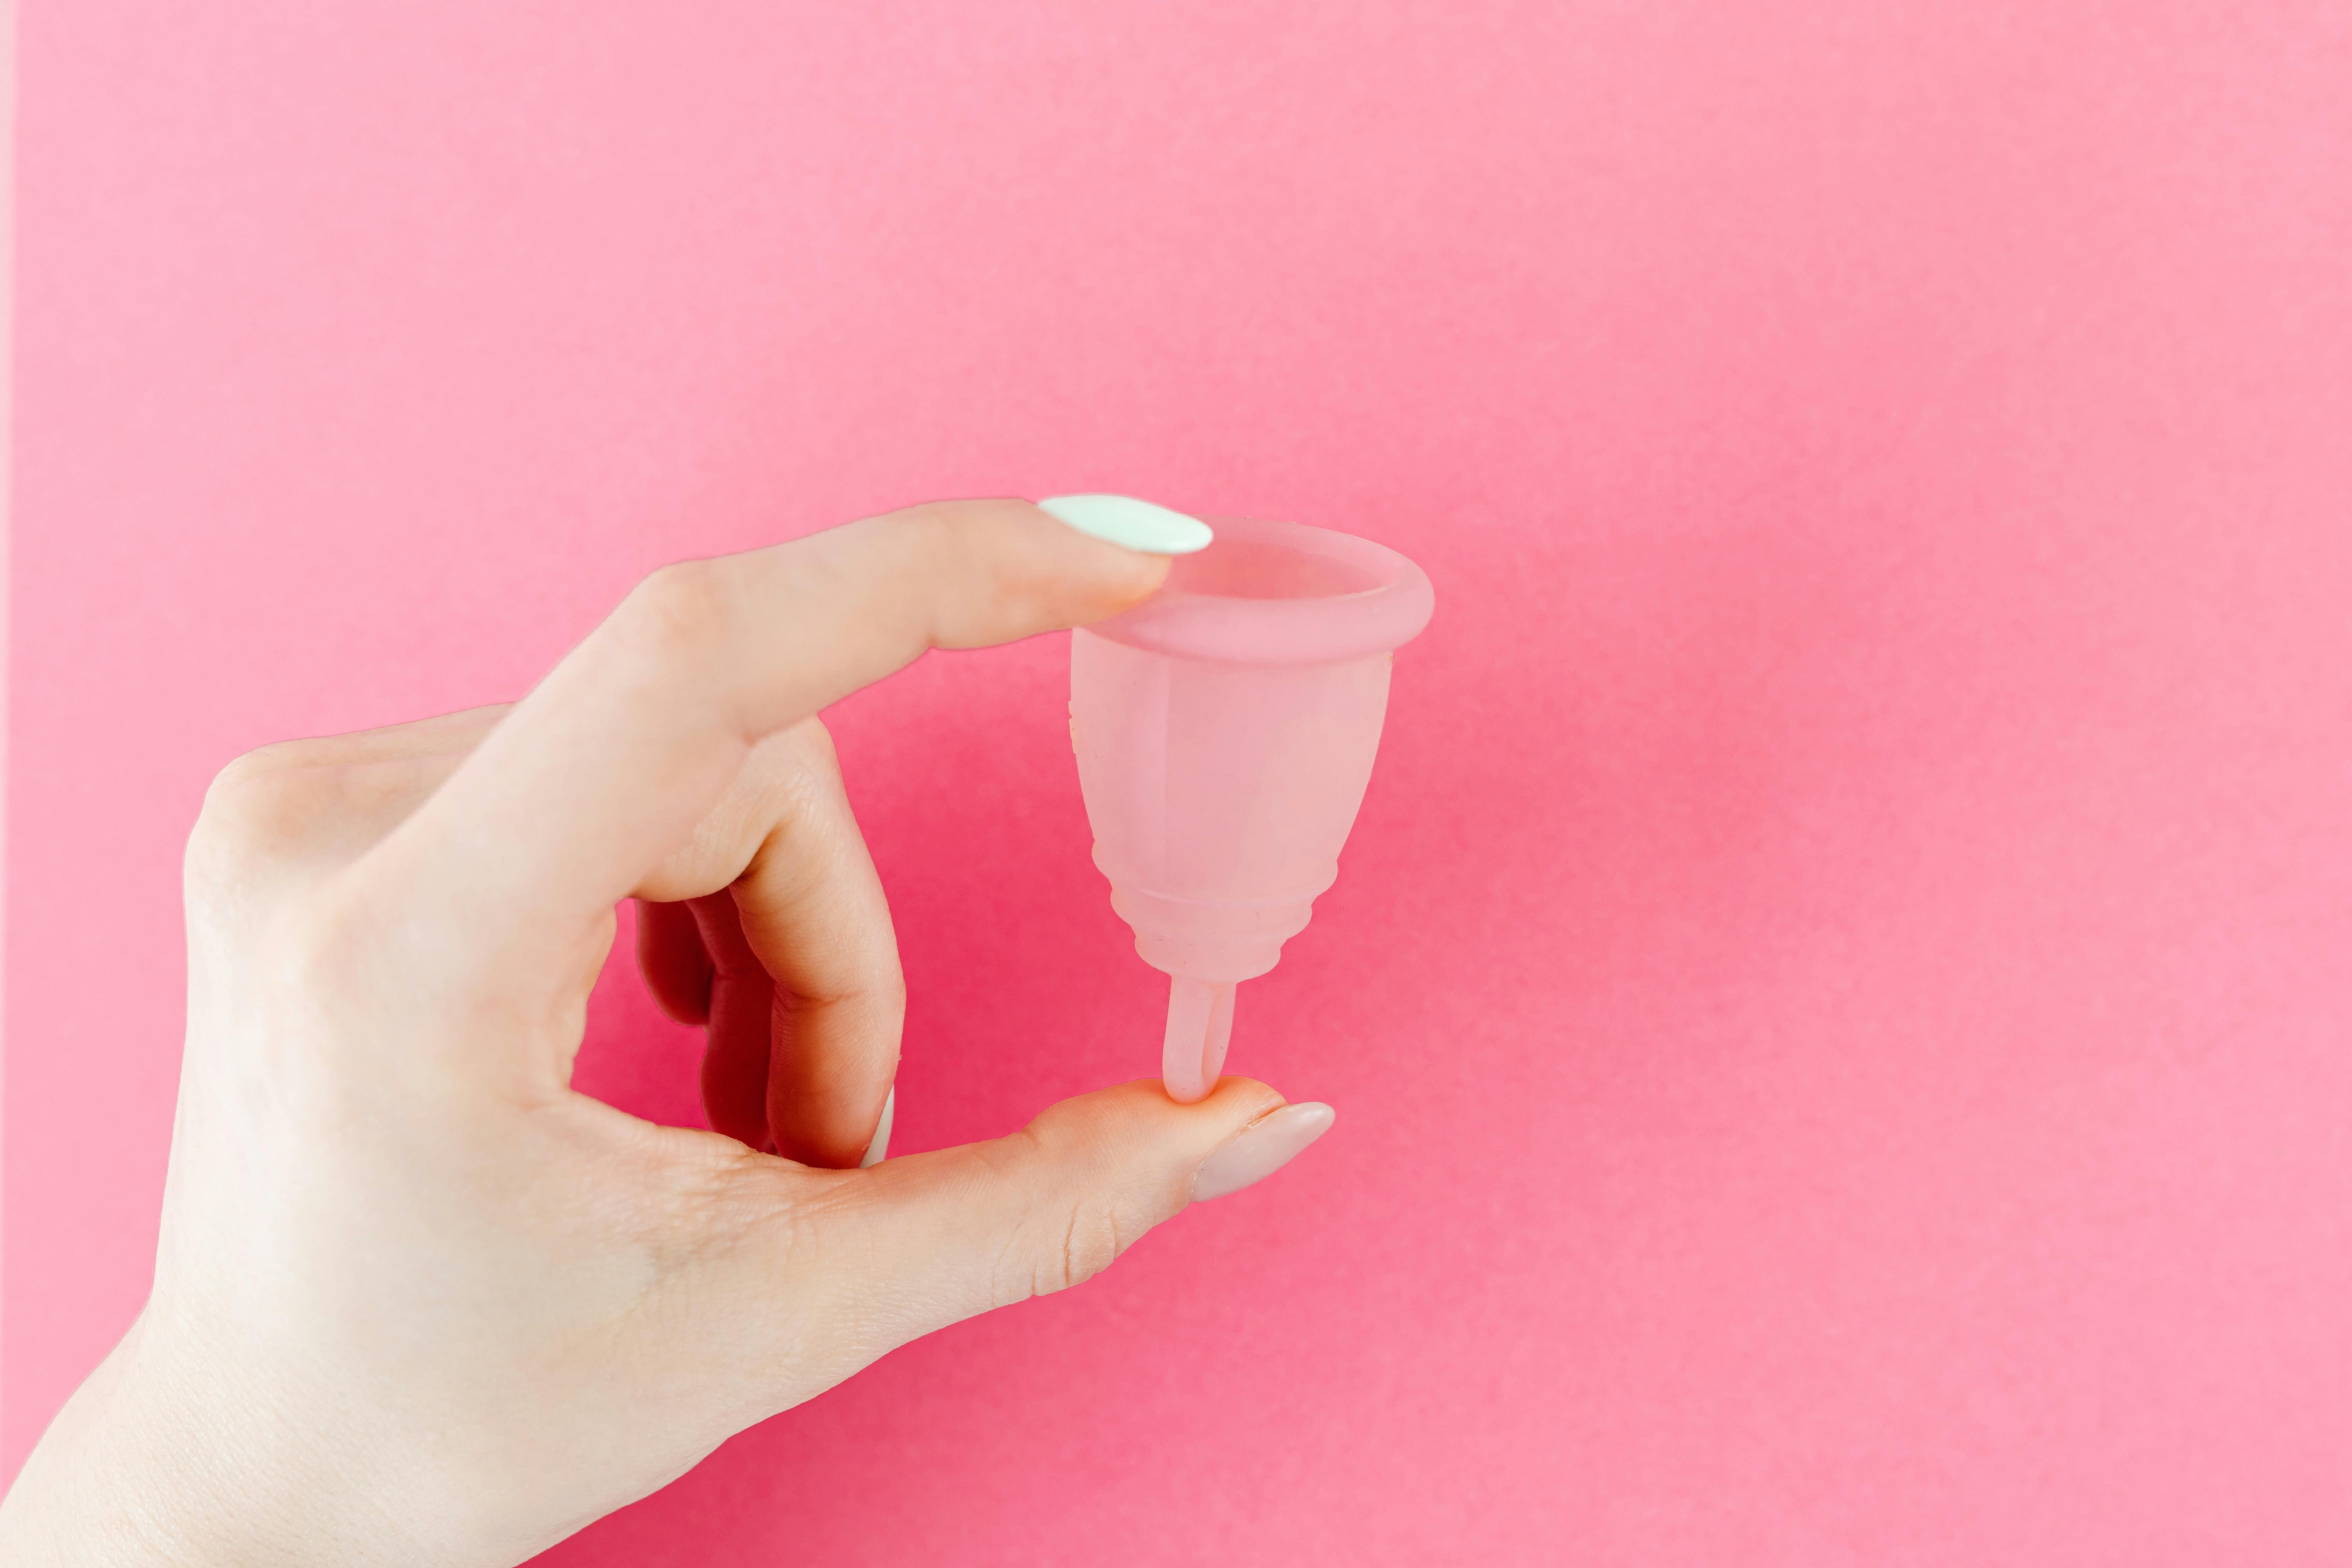 Free Fotos de stock gratuitas de copa menstrual, fondo rosa, mano Stock Photo